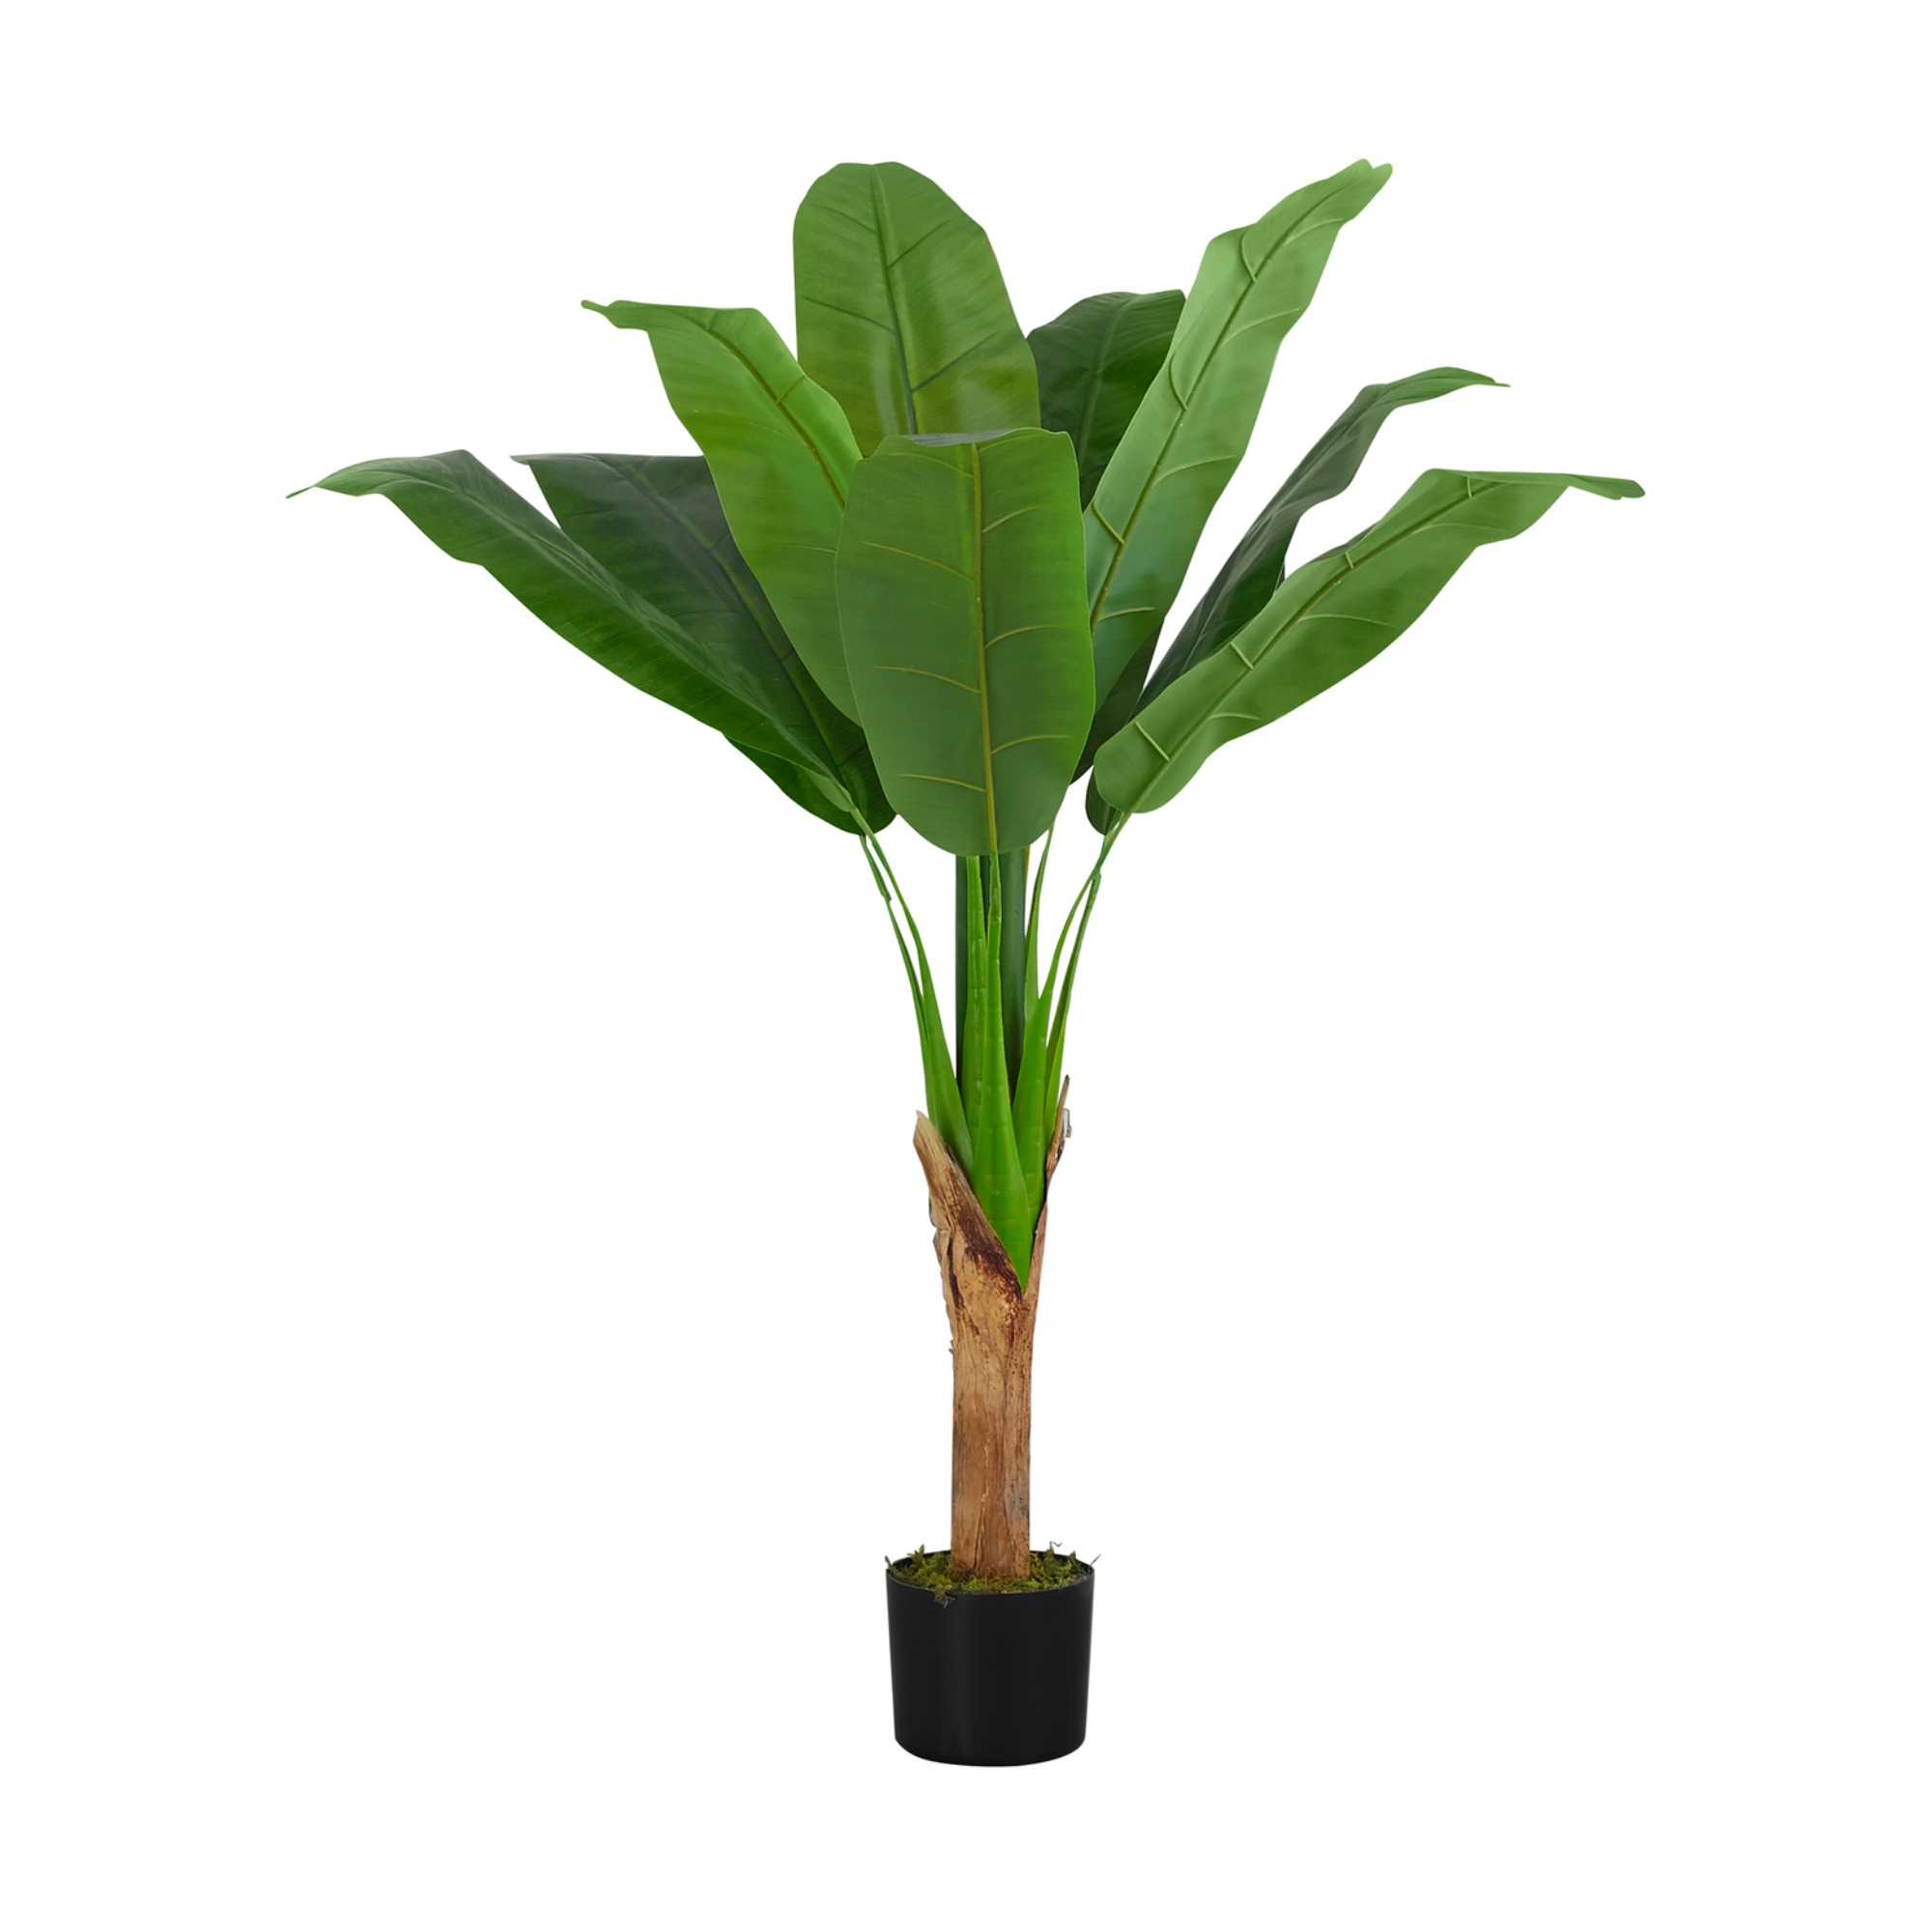 ARTIFICIAL PLANT - 43"H / INDOOR BANANA TREE IN A 5" POT